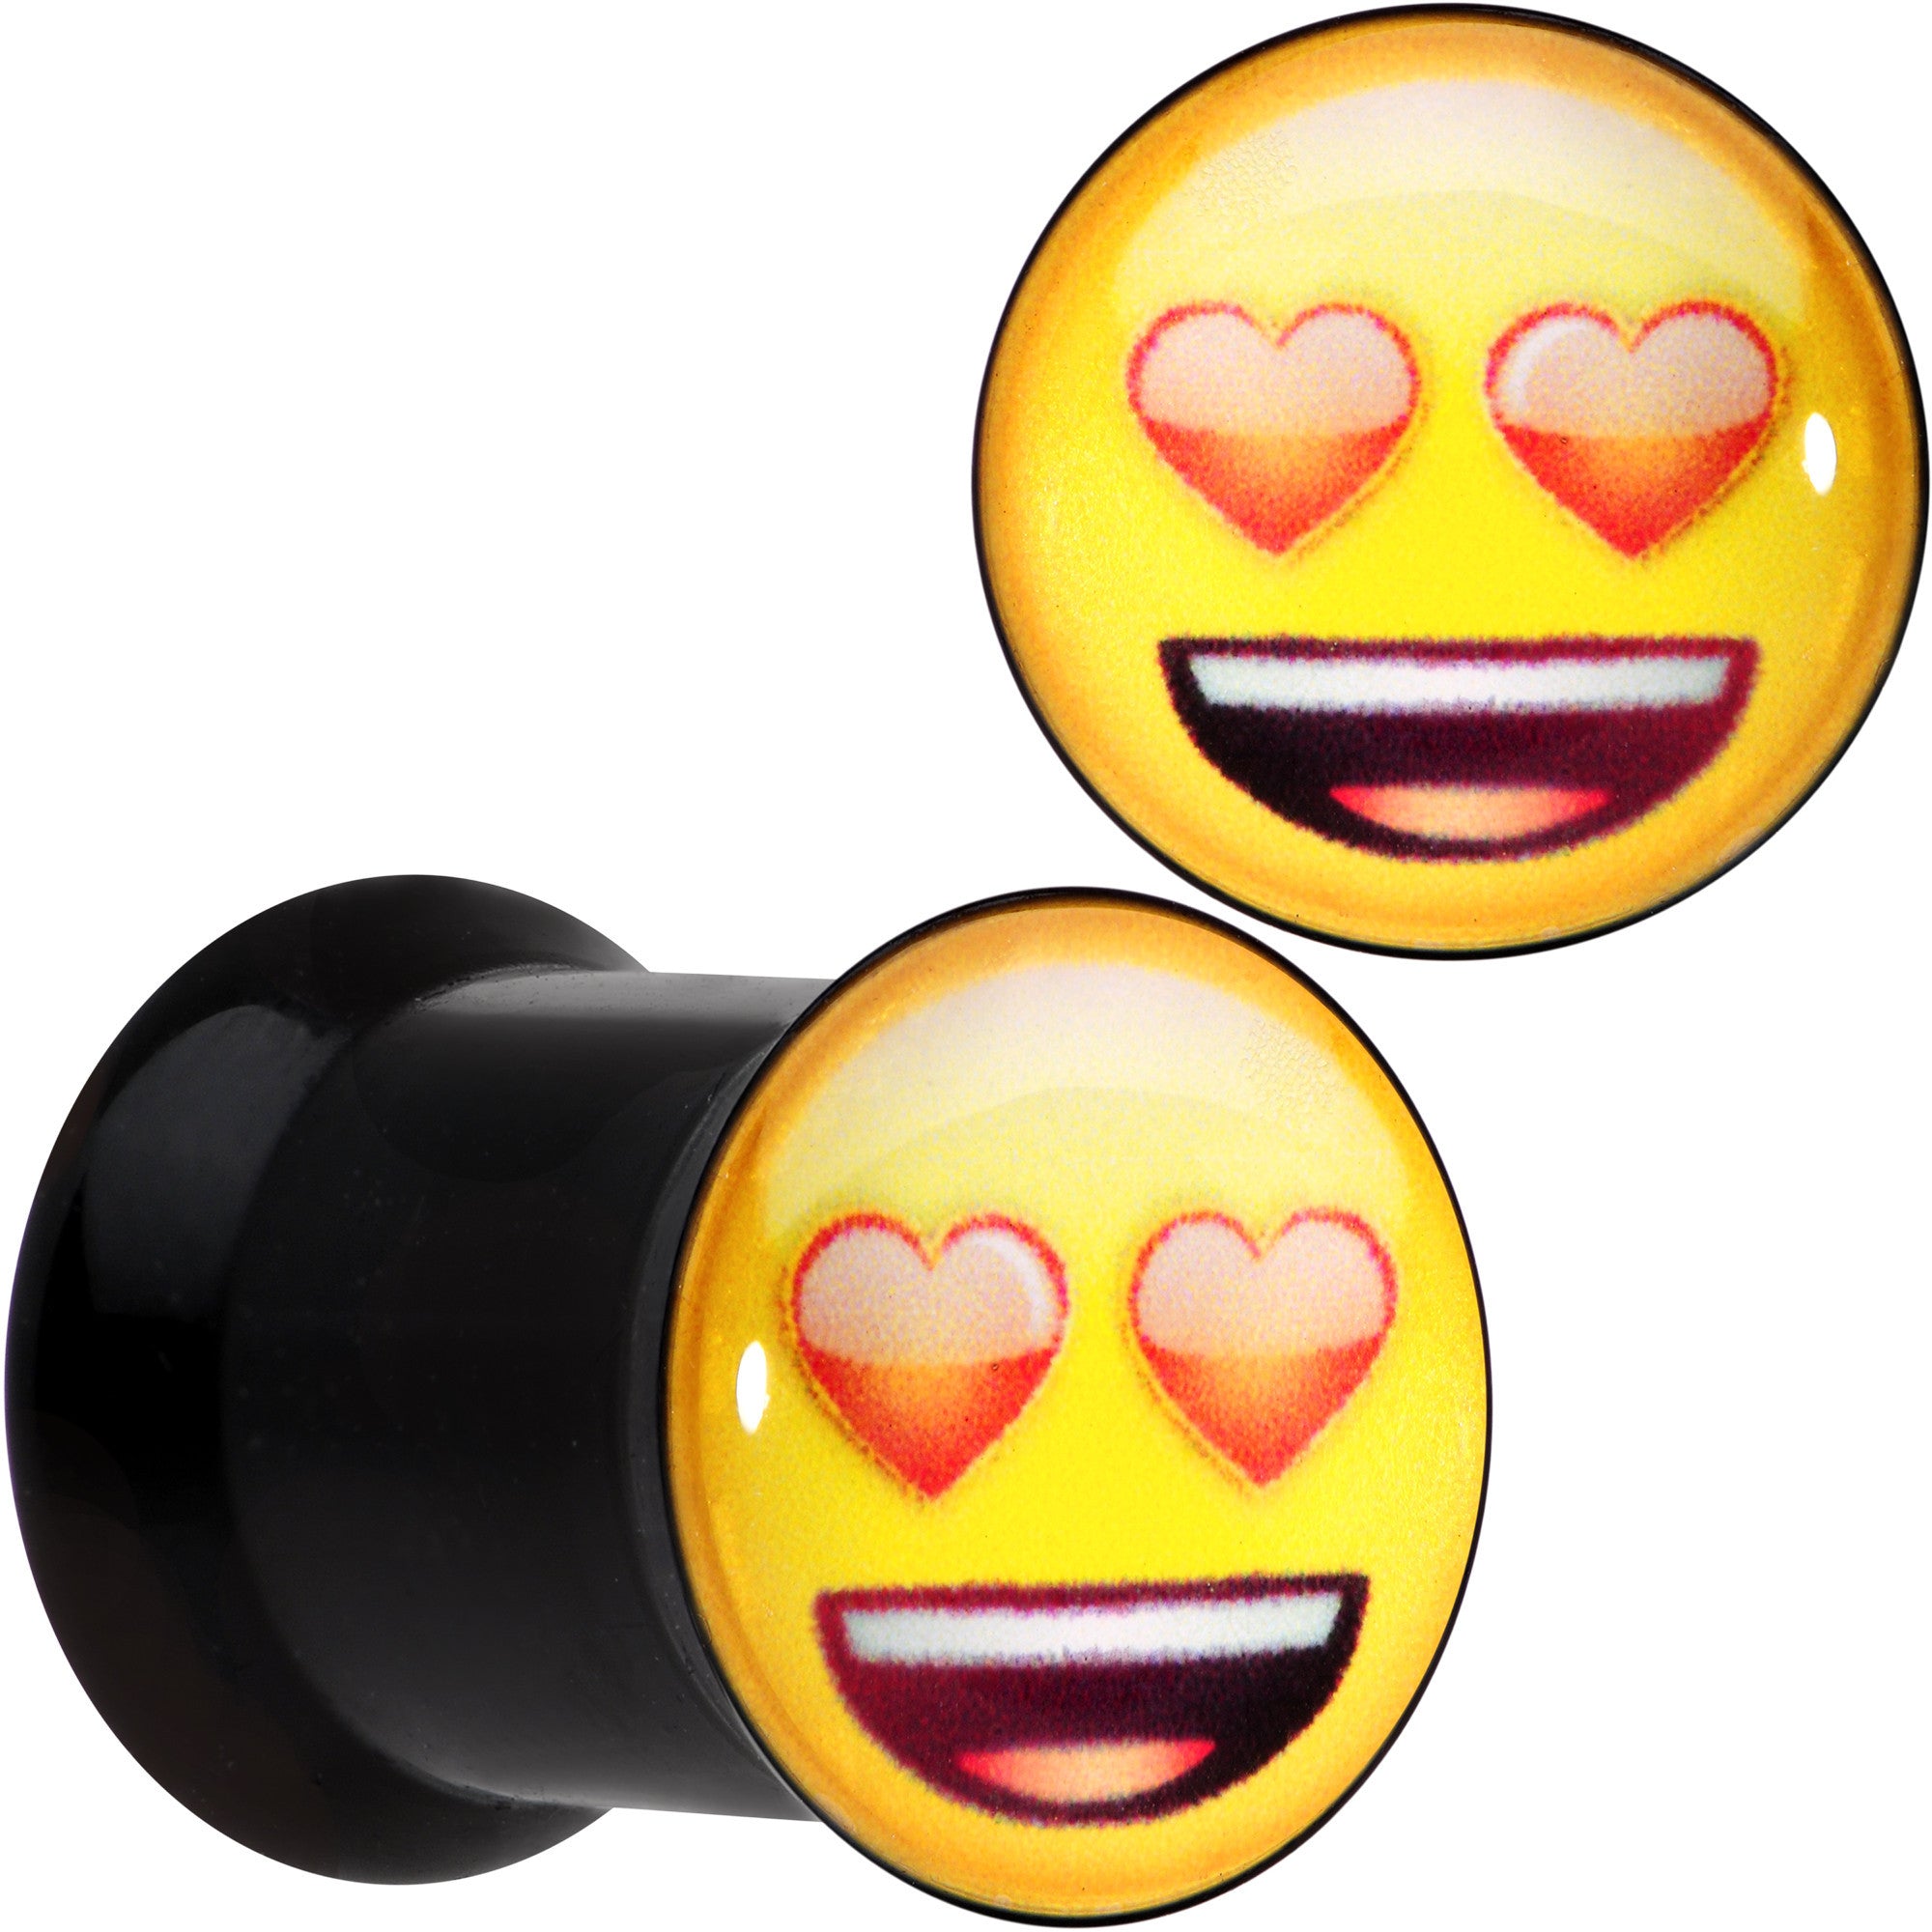 0 Gauge Licensed Heart Eyes emoji Acrylic Double Flare Plug Set